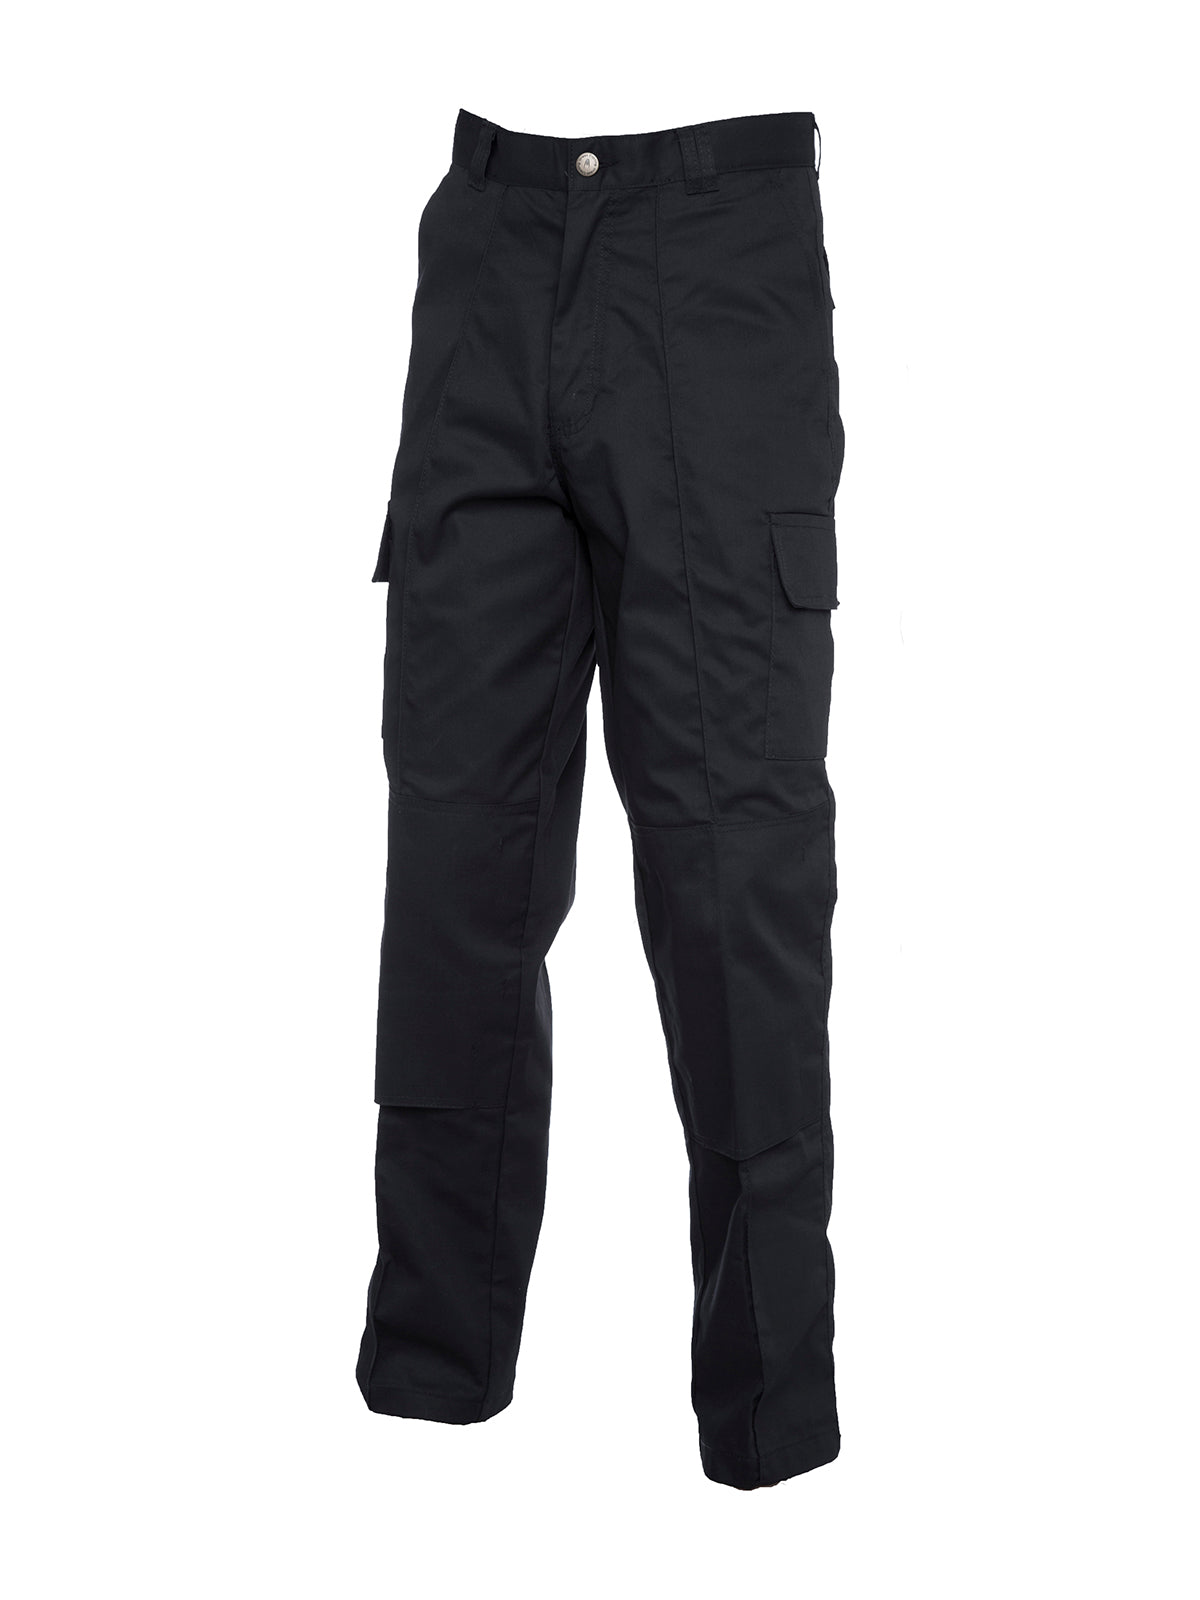 Uneek Cargo Trouser with Knee Pad Pockets Regular UC904R - Black